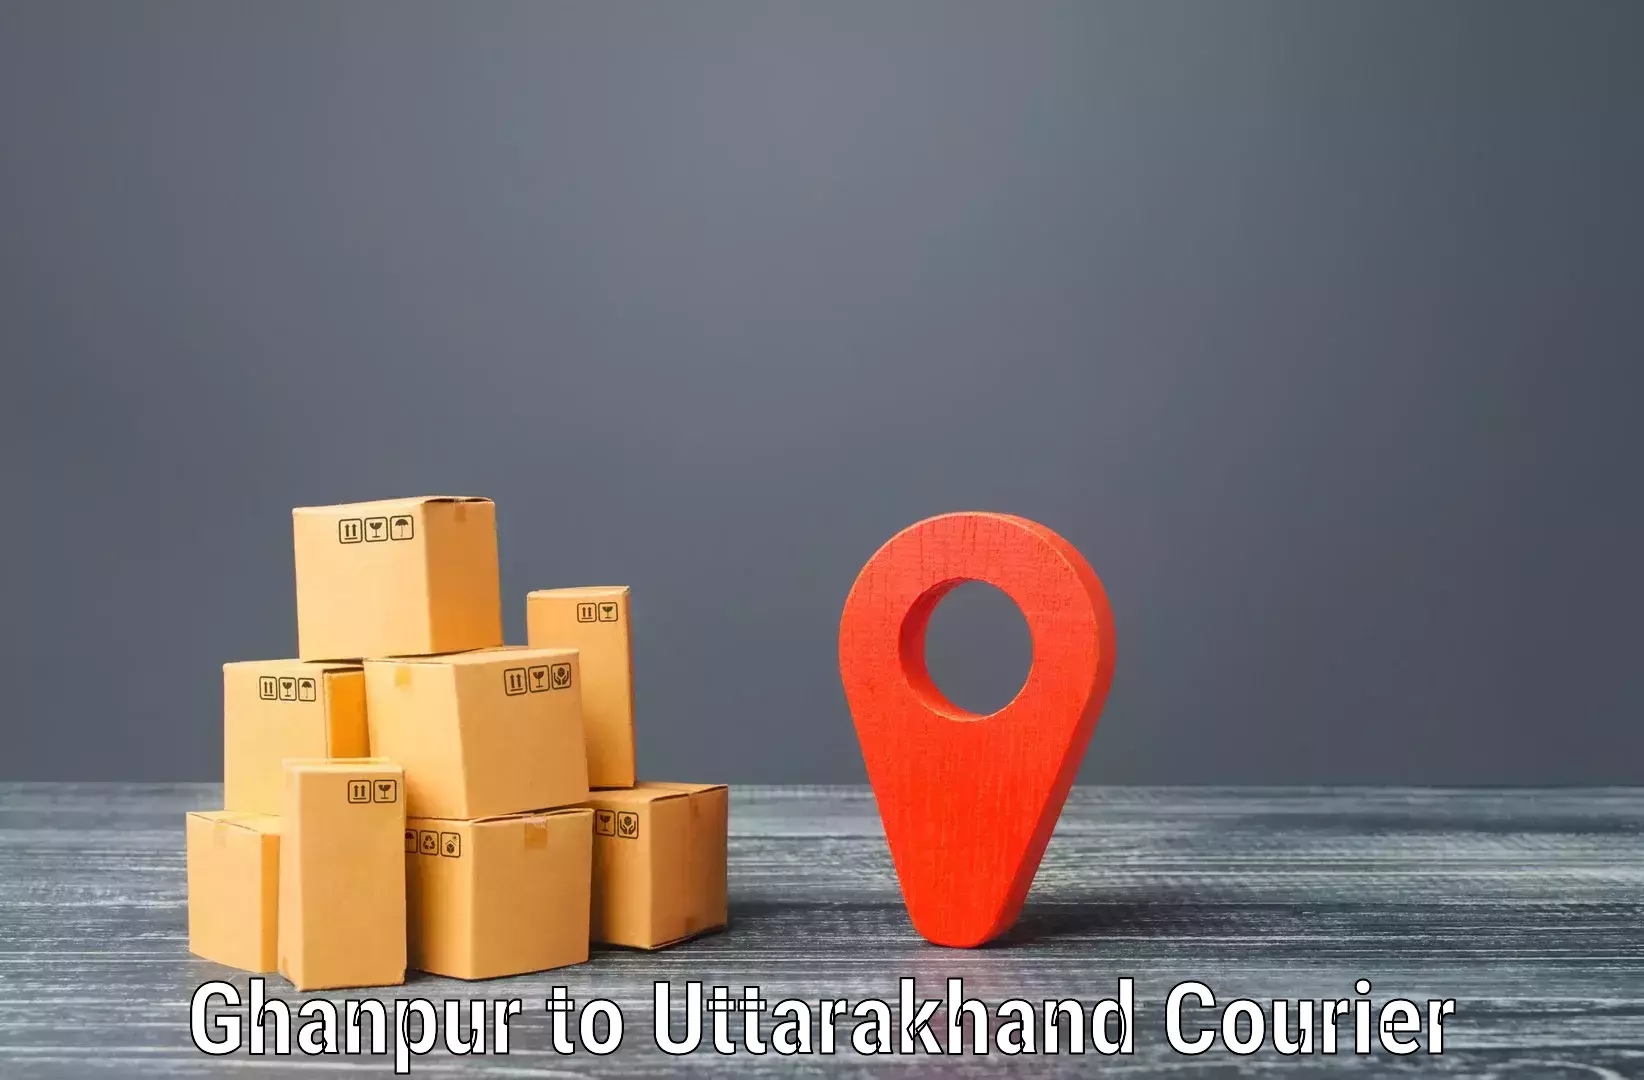 High-performance logistics Ghanpur to Dehradun